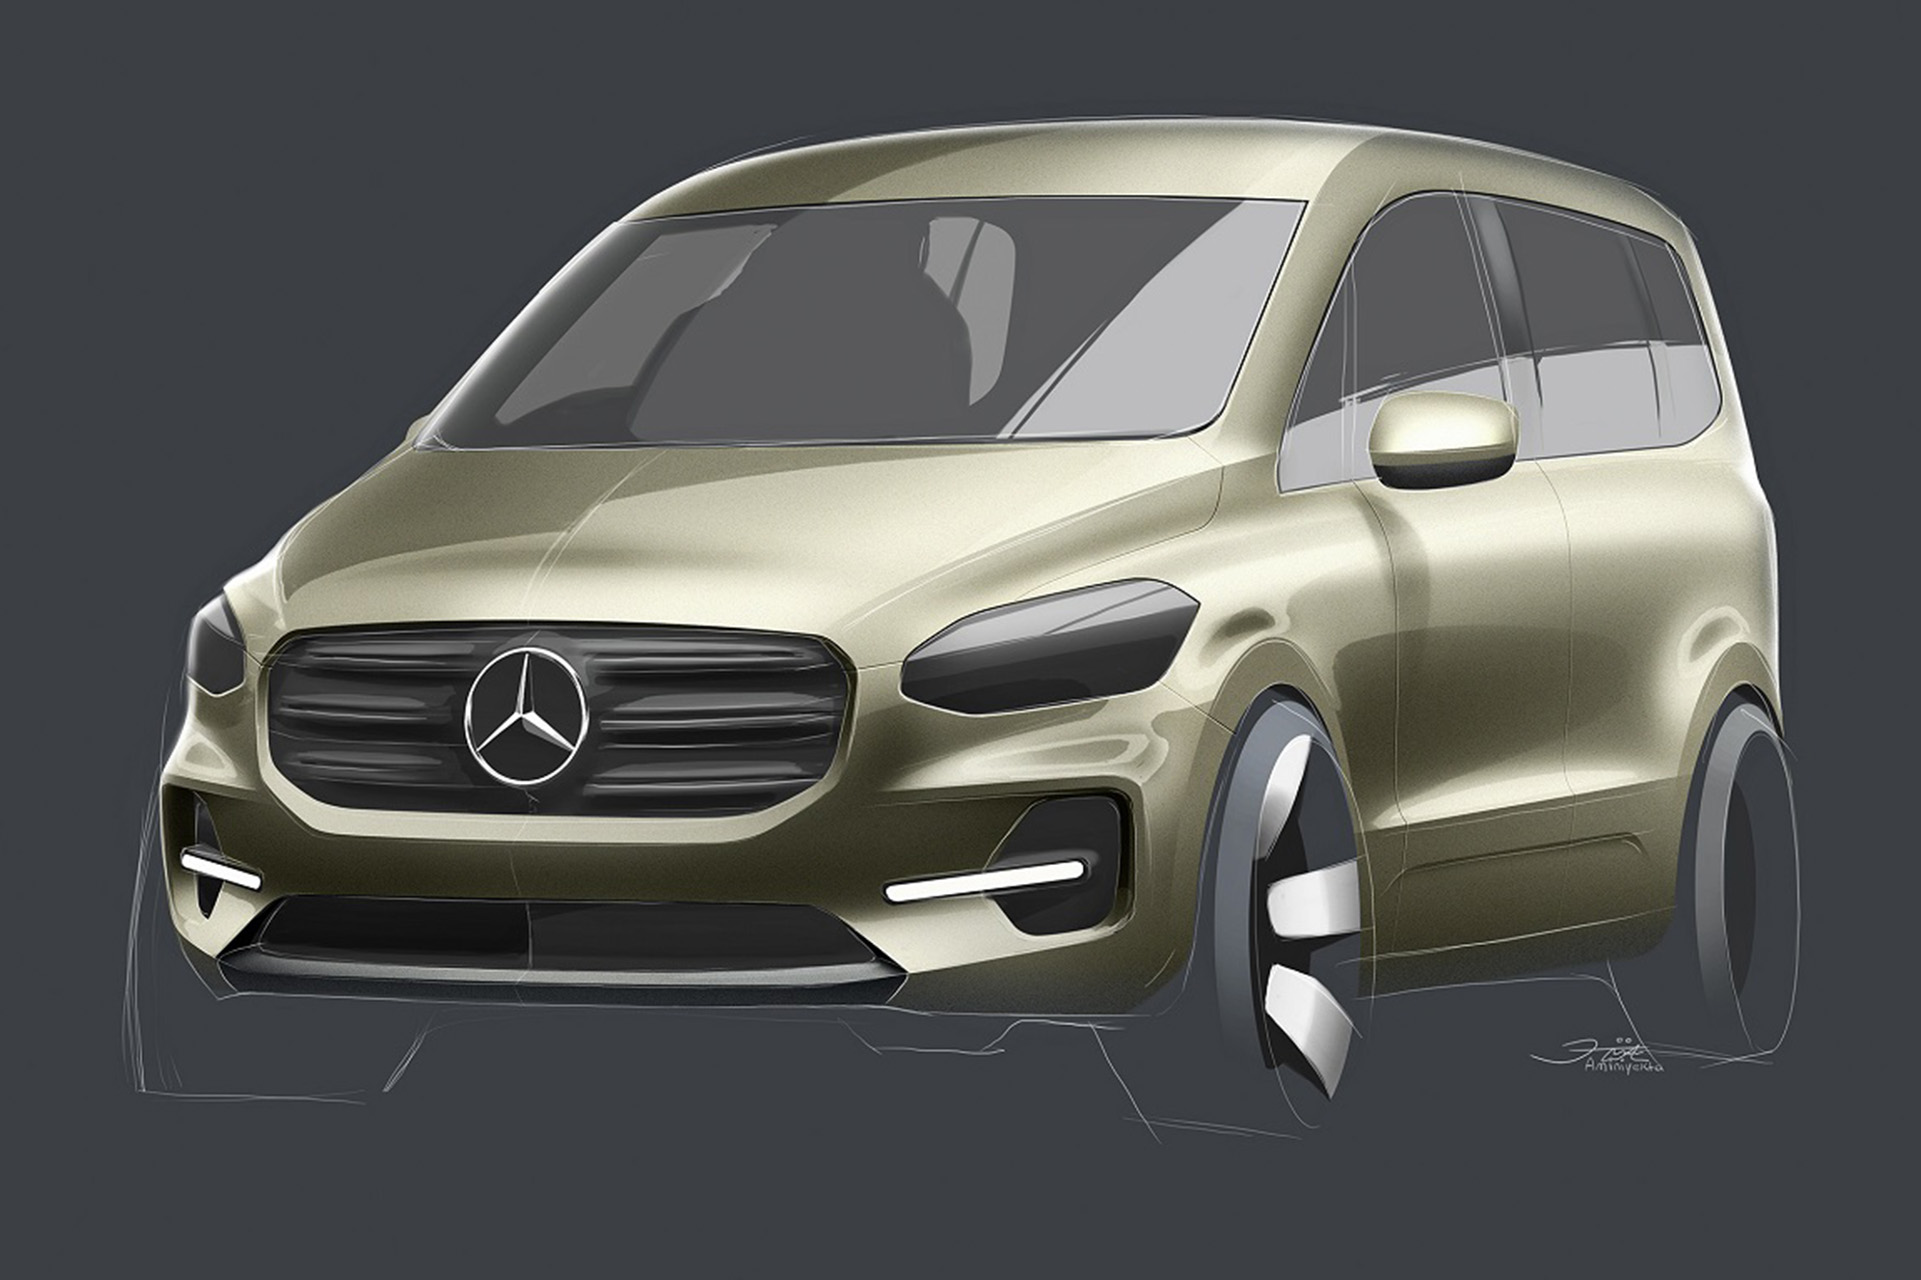 2022 Mercedes-Benz Citan Design Sketch Wallpapers #100 of 115